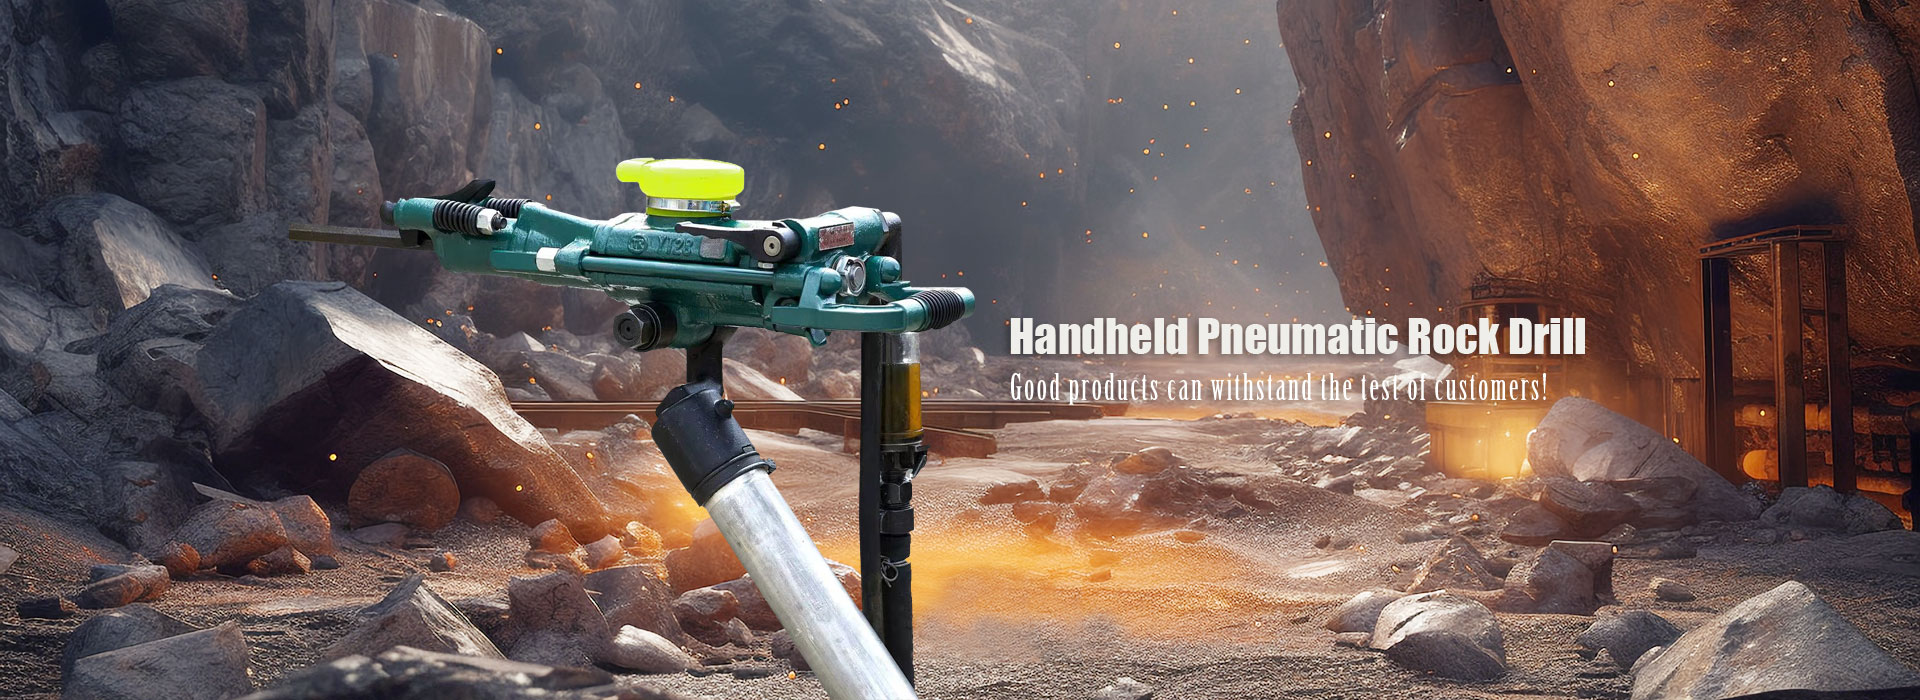 Handheld Pneumatic Rock Drill China